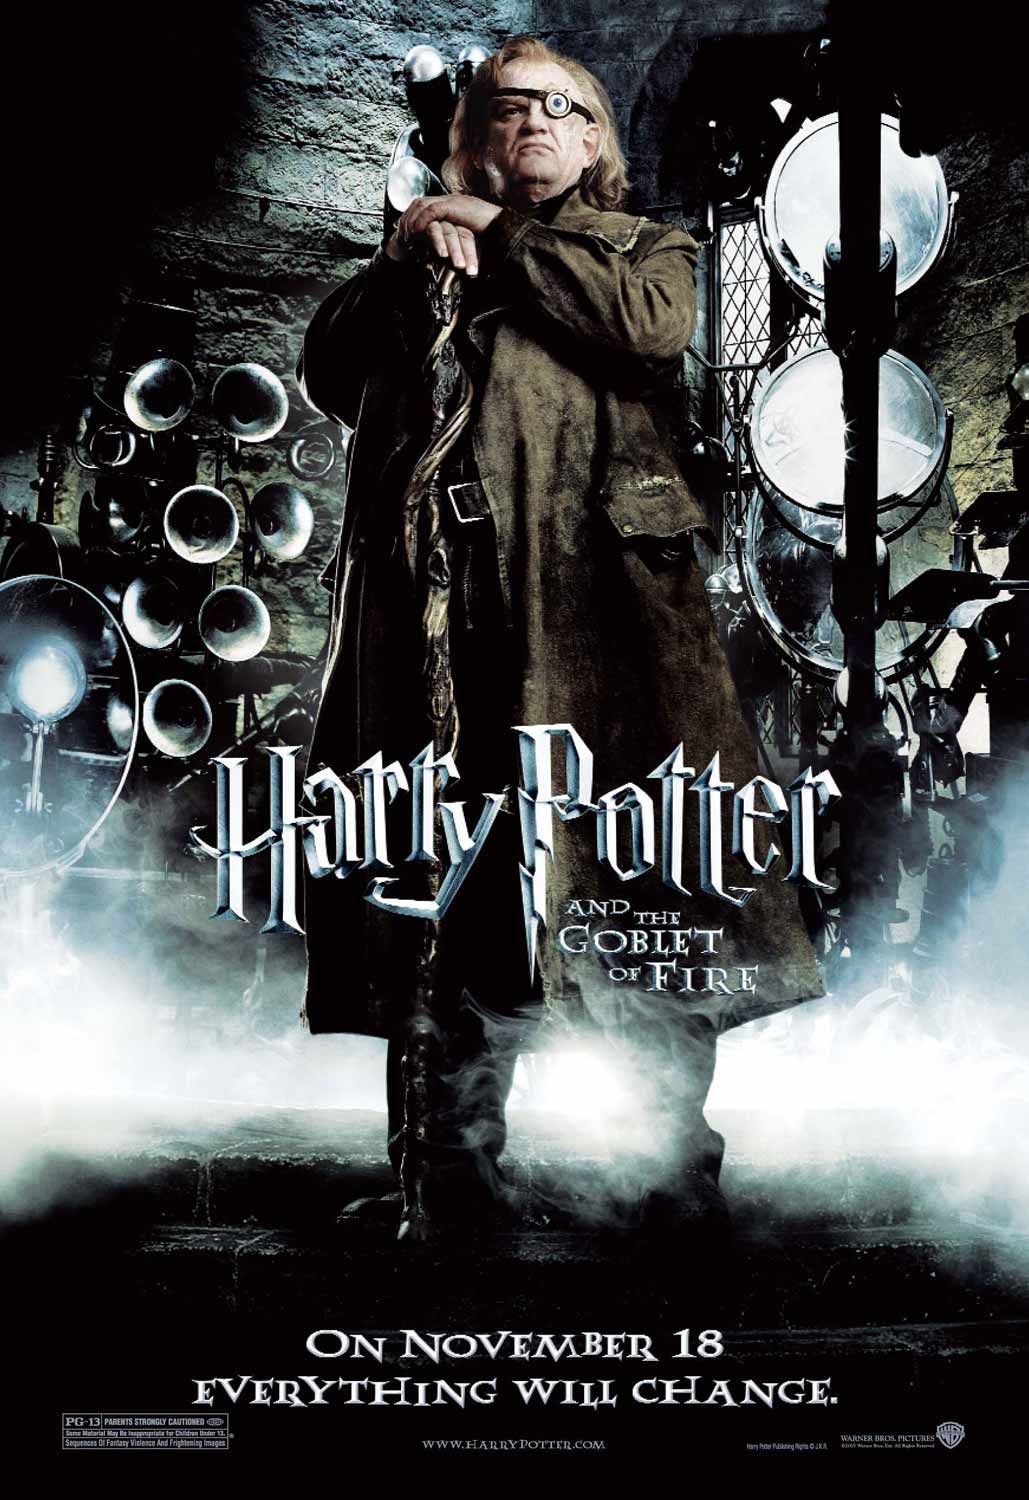 Постер - Гарри Поттер и кубок огня: 1029x1500 / 227 Кб